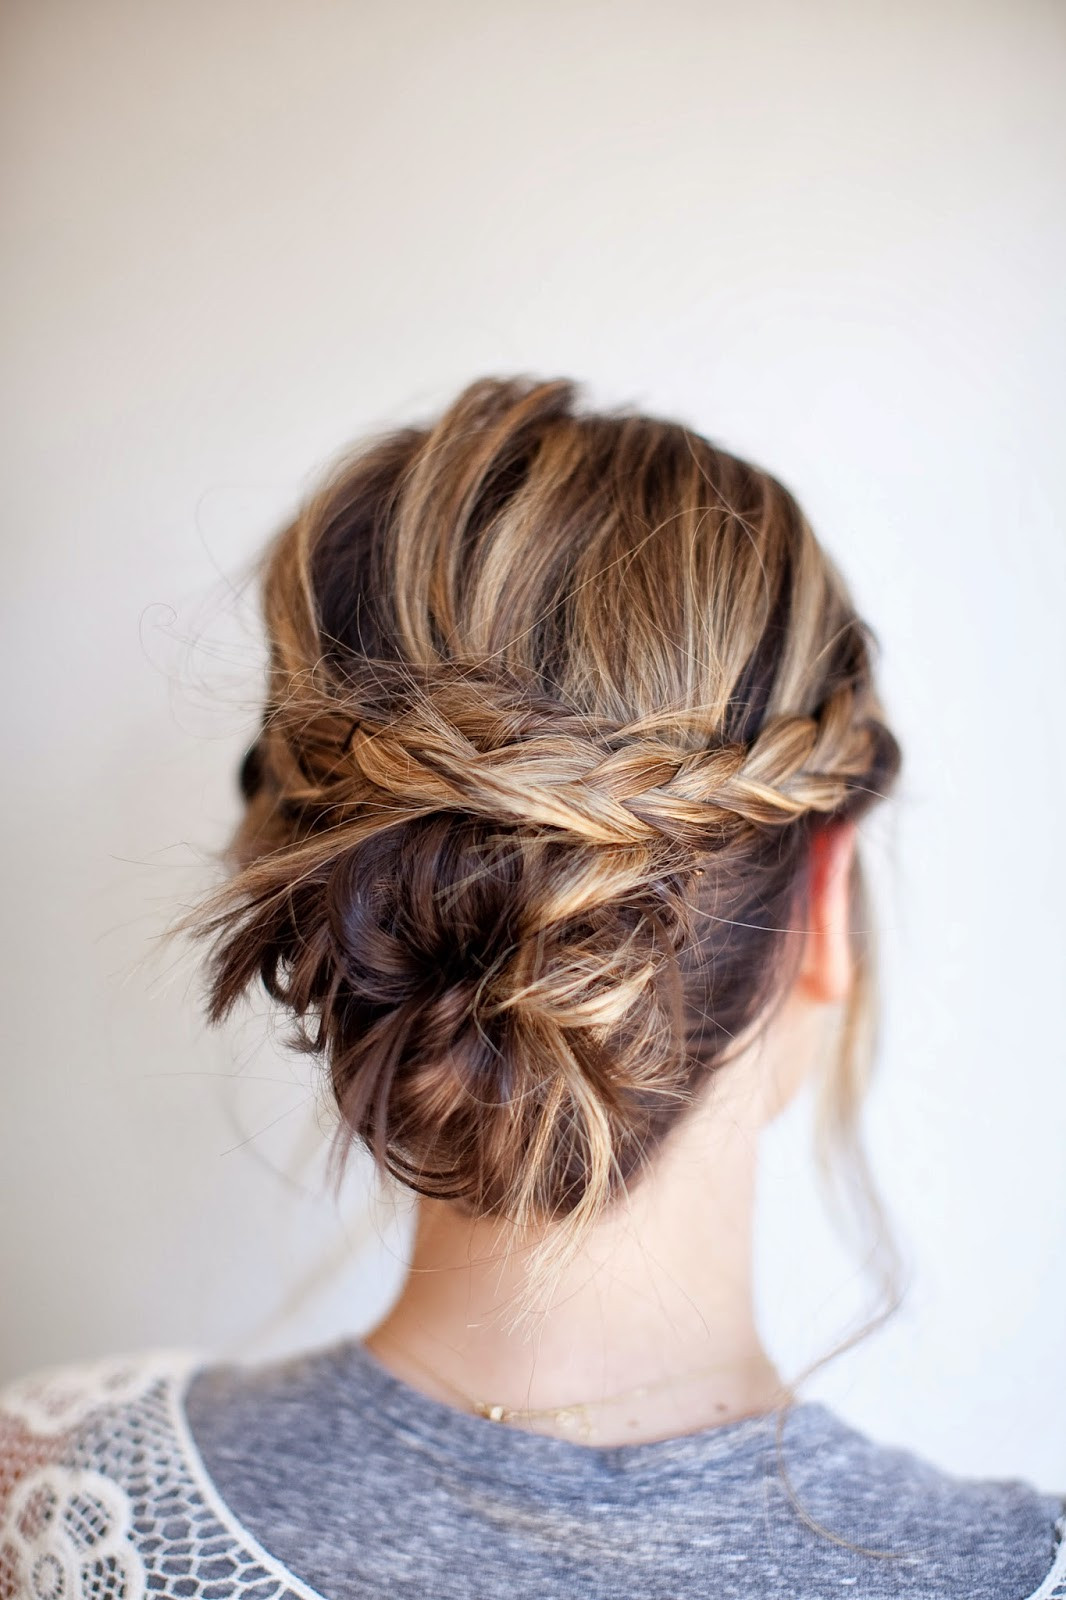 Best ideas about DIY Bridal Hair
. Save or Pin TESSA RAYANNE THREE DIY Bridal Hair Tutorials Now.